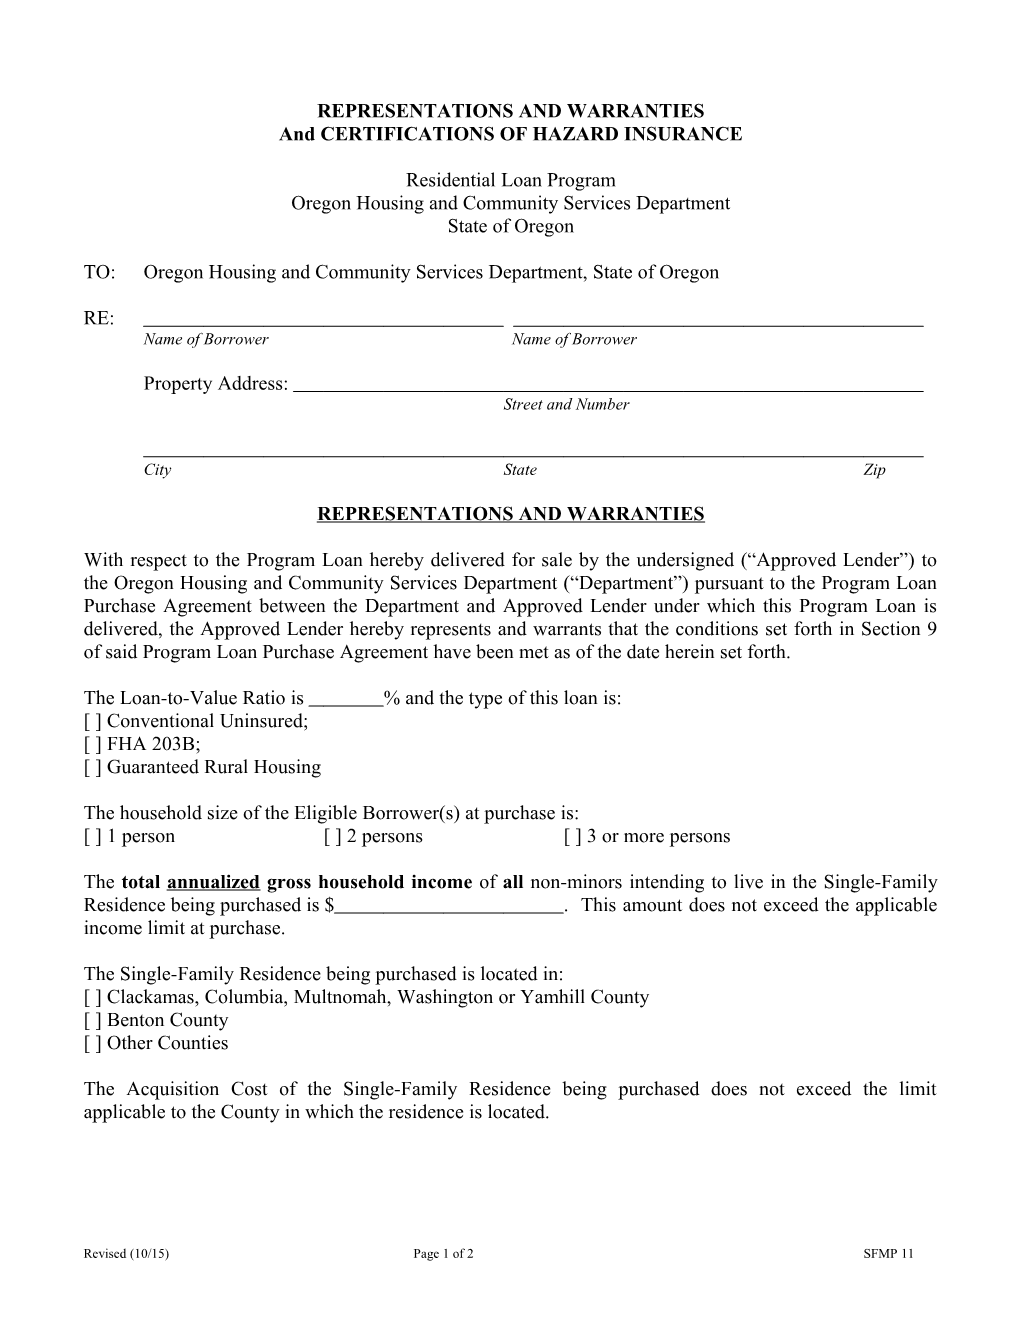 Oregon Bond Program Lender Form: Representations, Warranties and Certification of Hazard